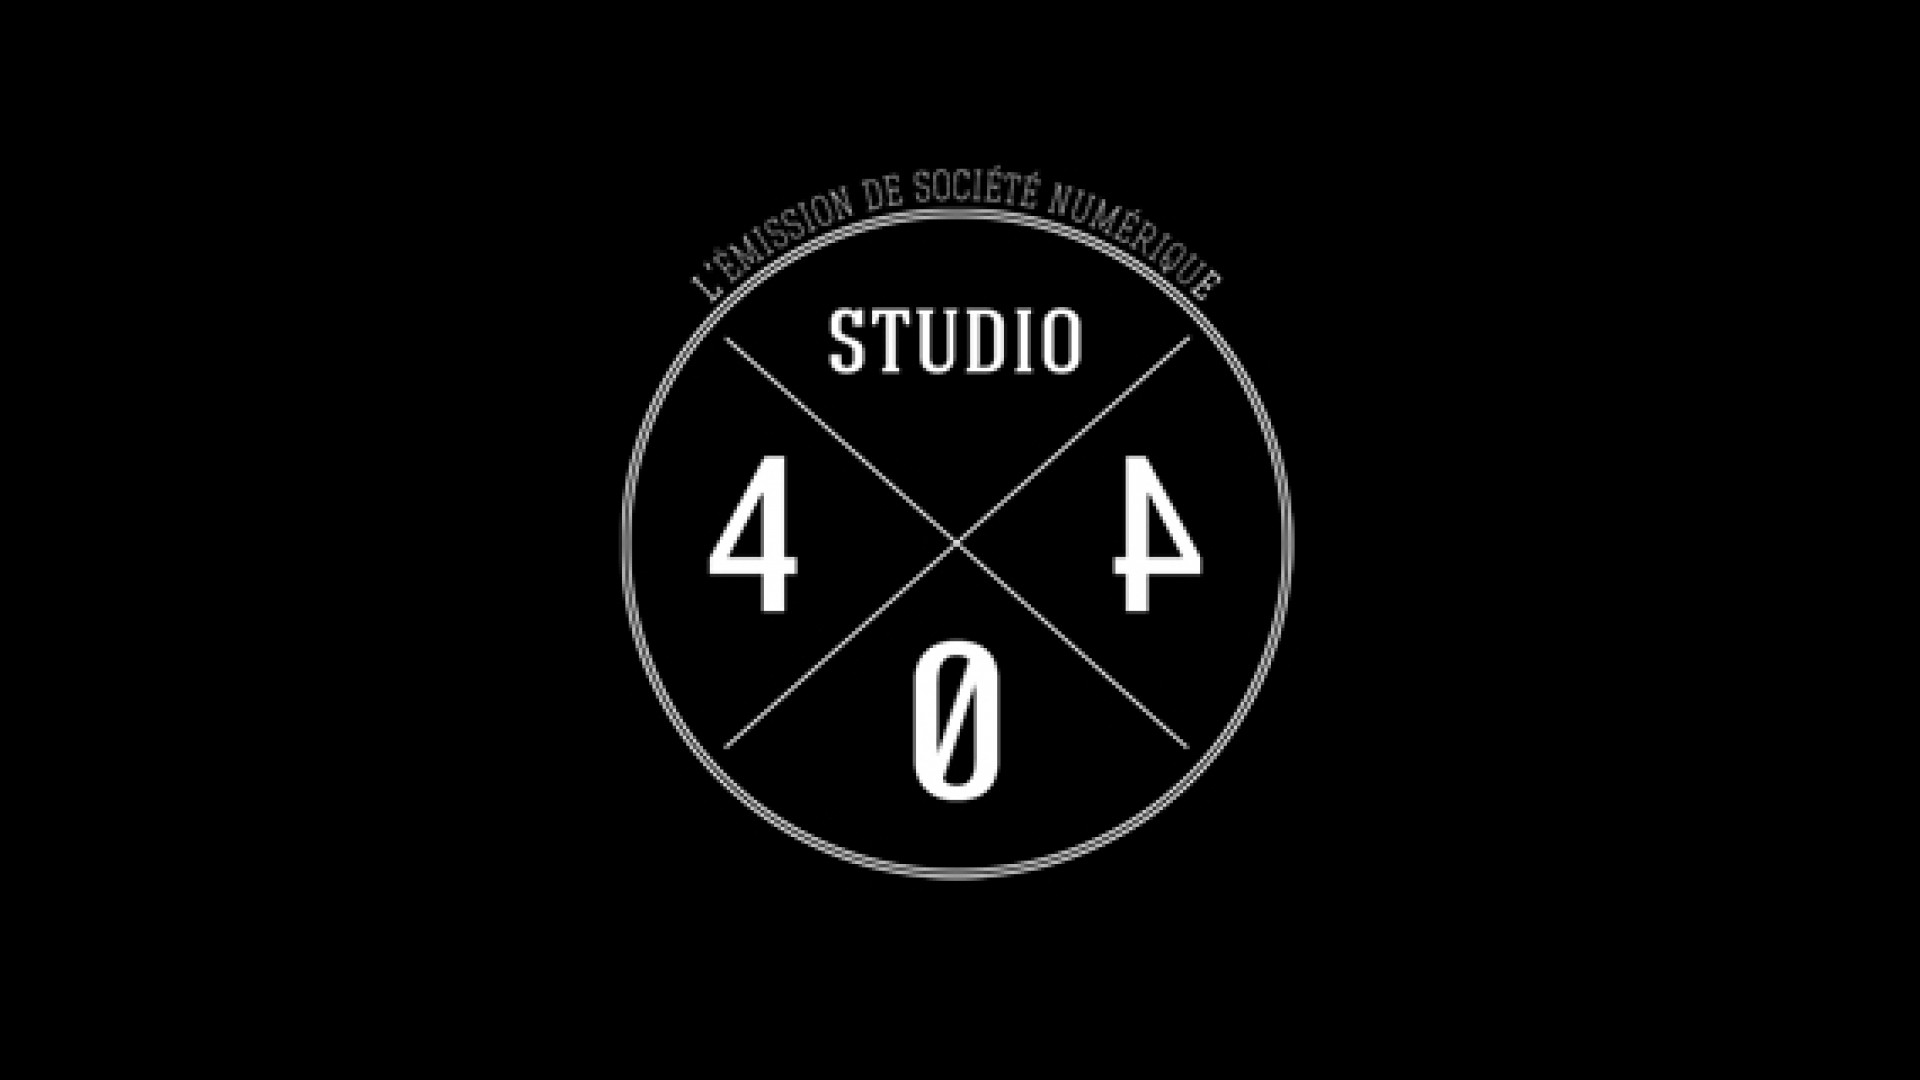 Studio 404 and you